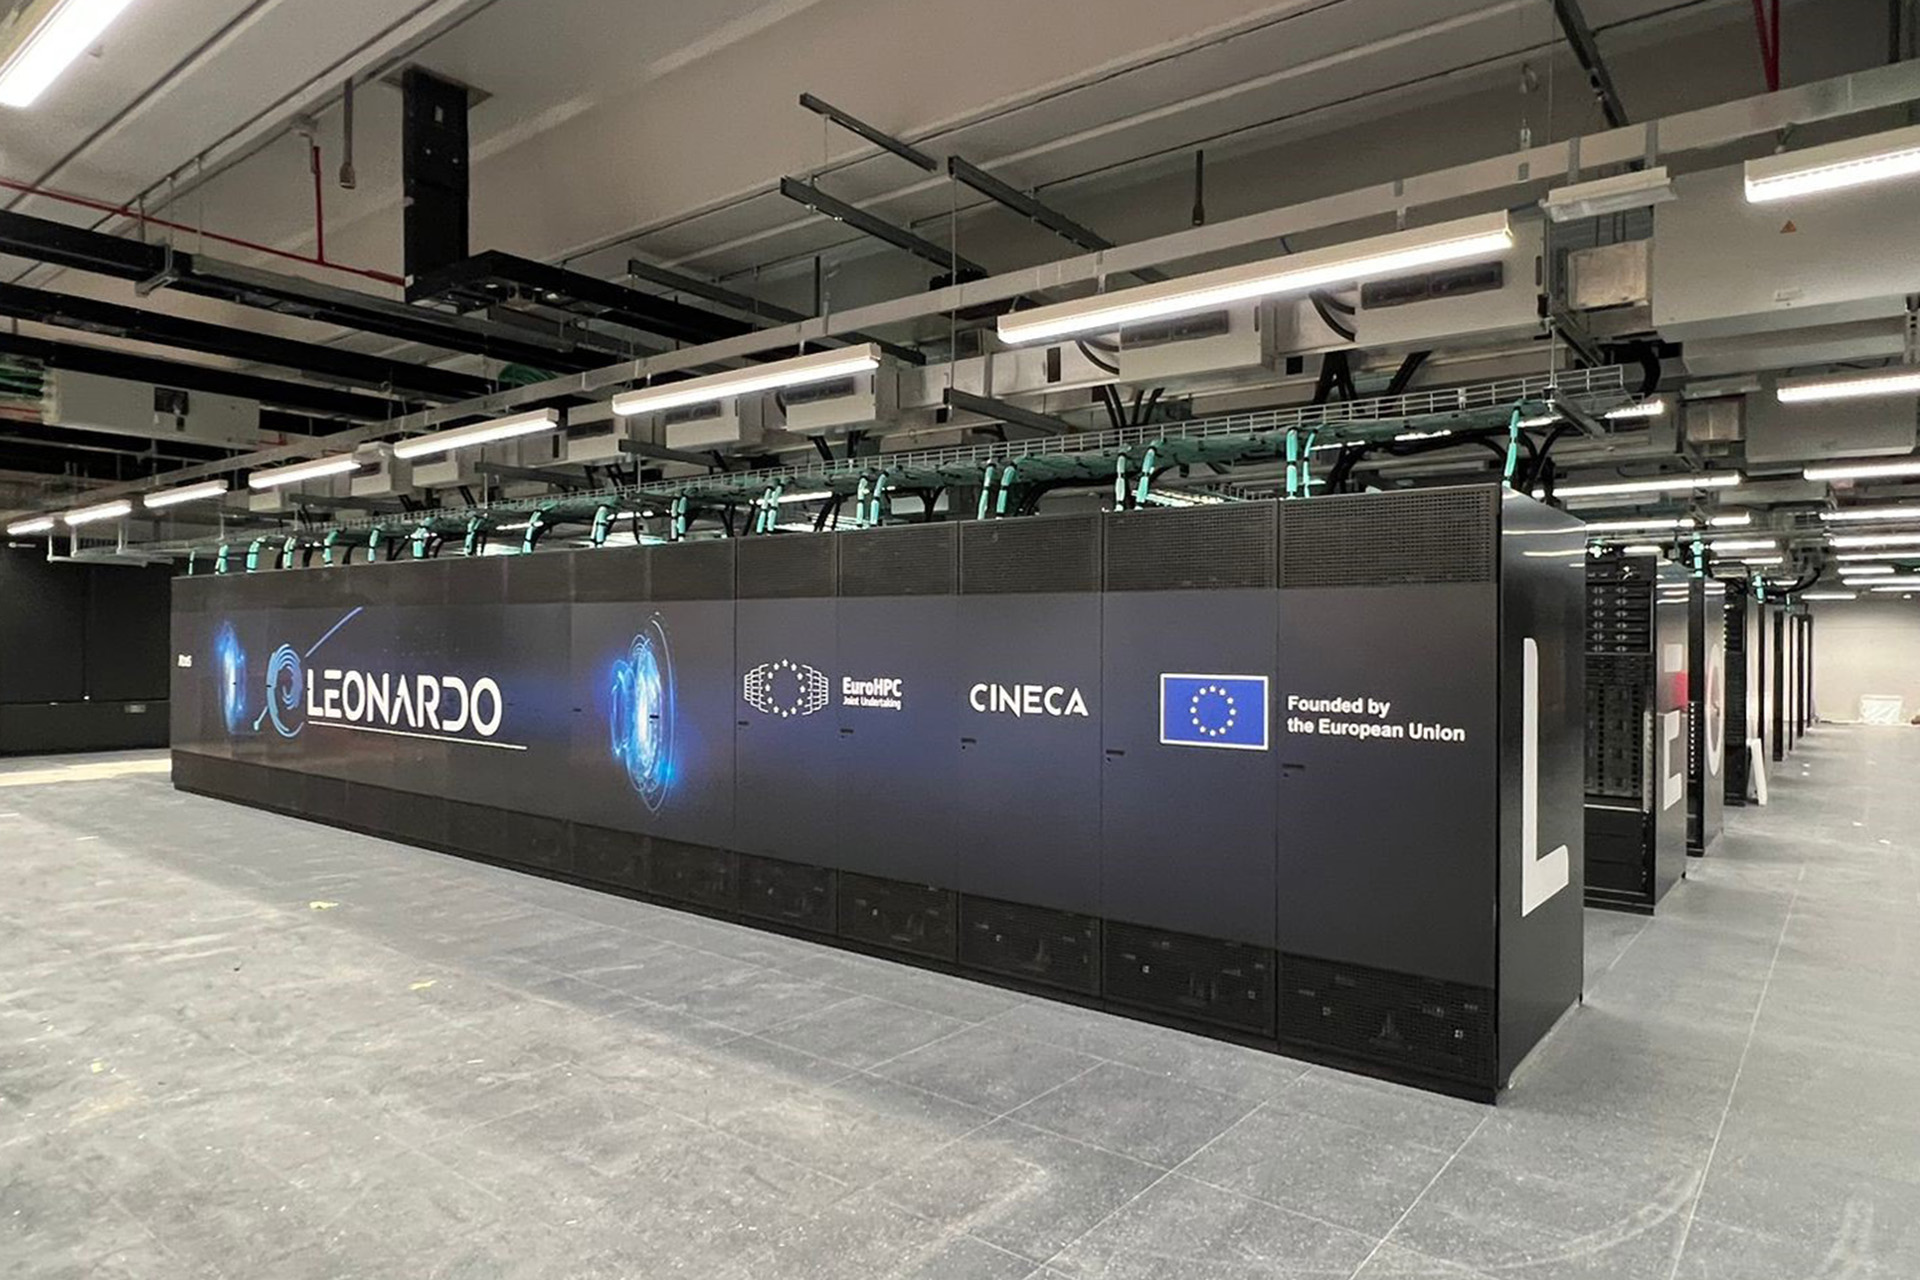 The Leonardo supercomputer